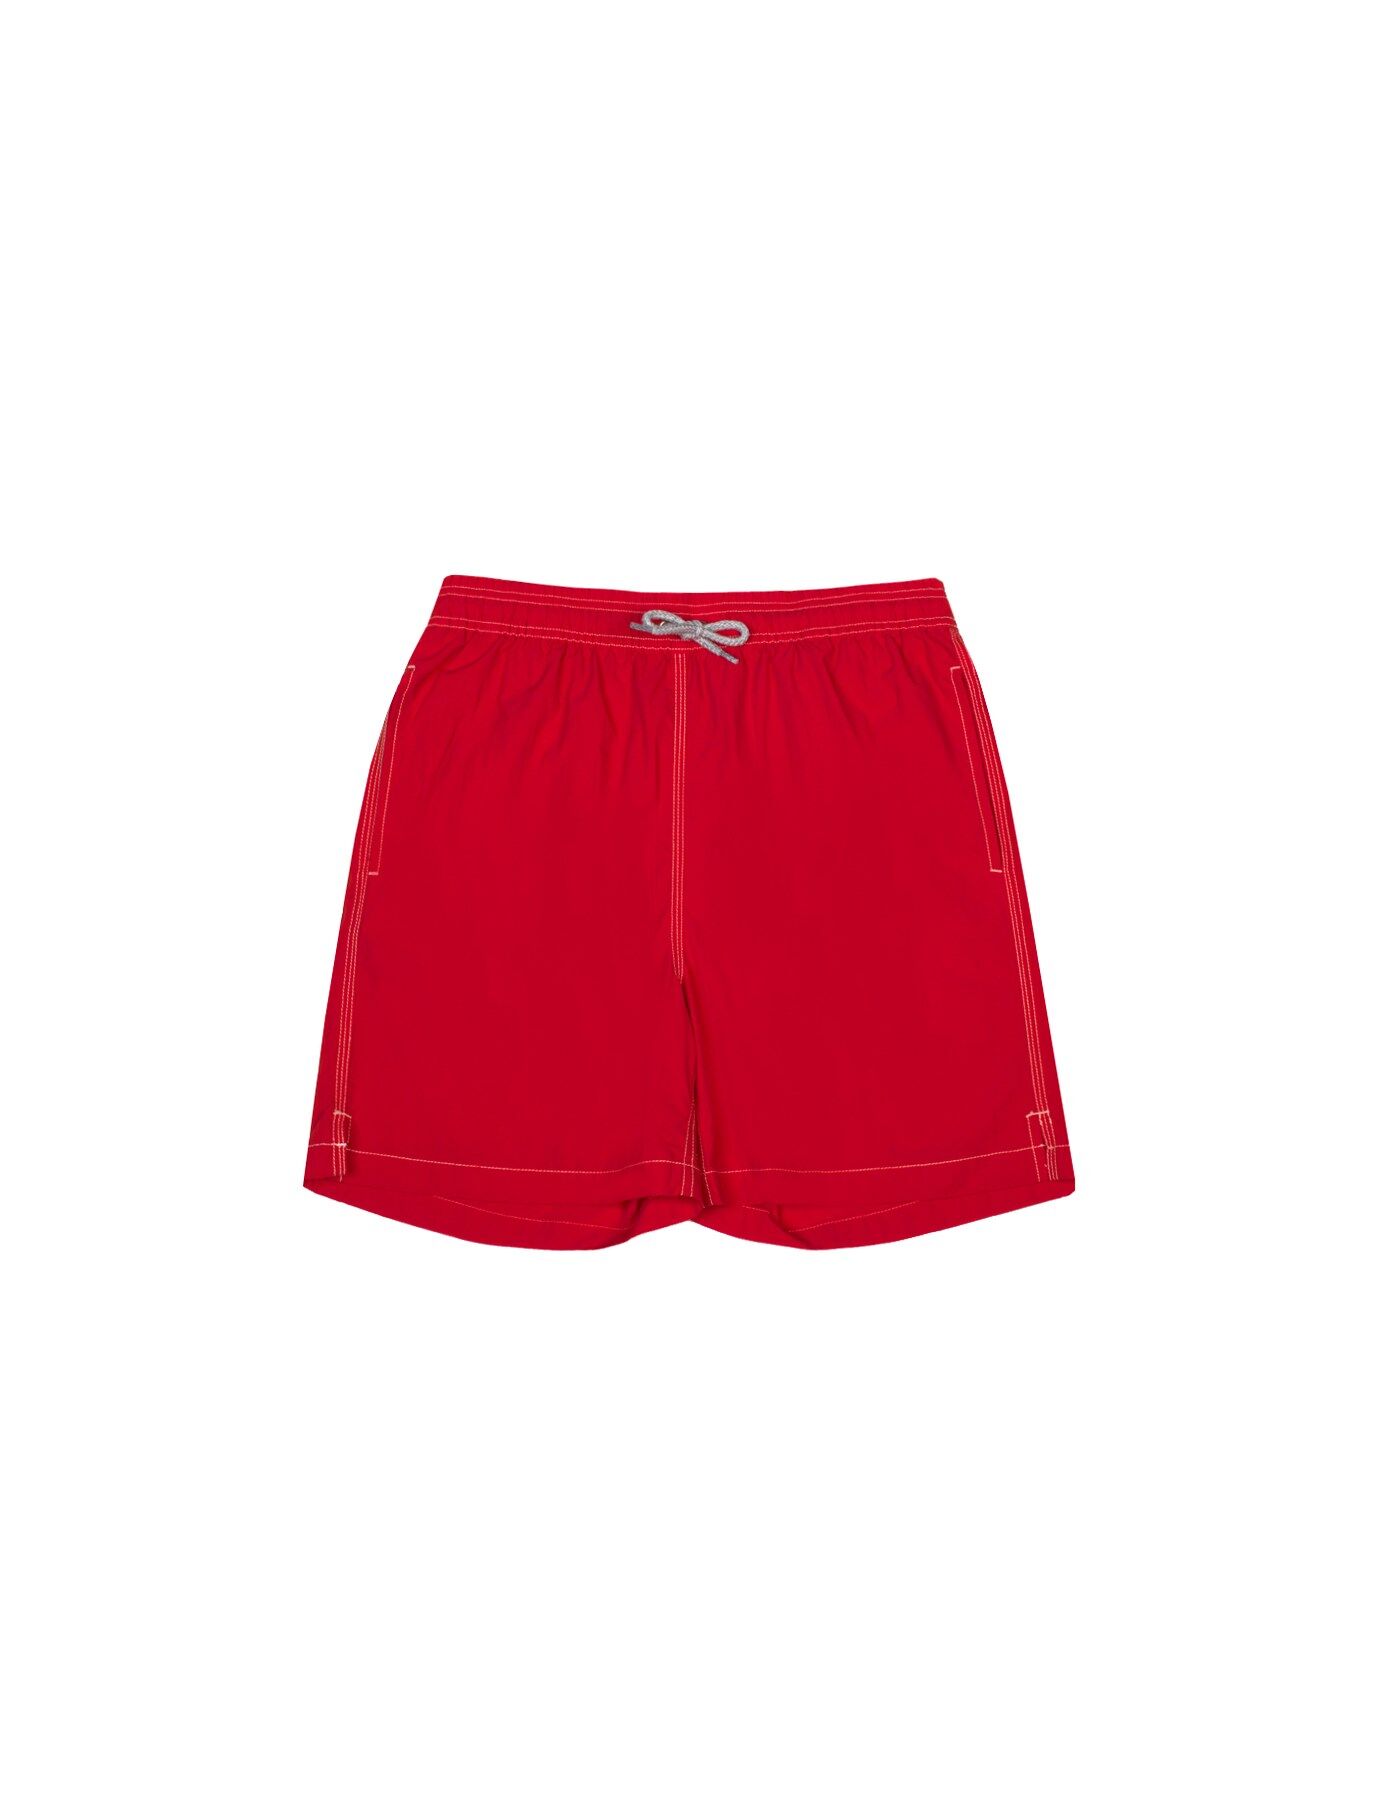 Hawes & Curtis Men's Garment Dye Swim Shorts in Red   XL   Hawes & Curtis